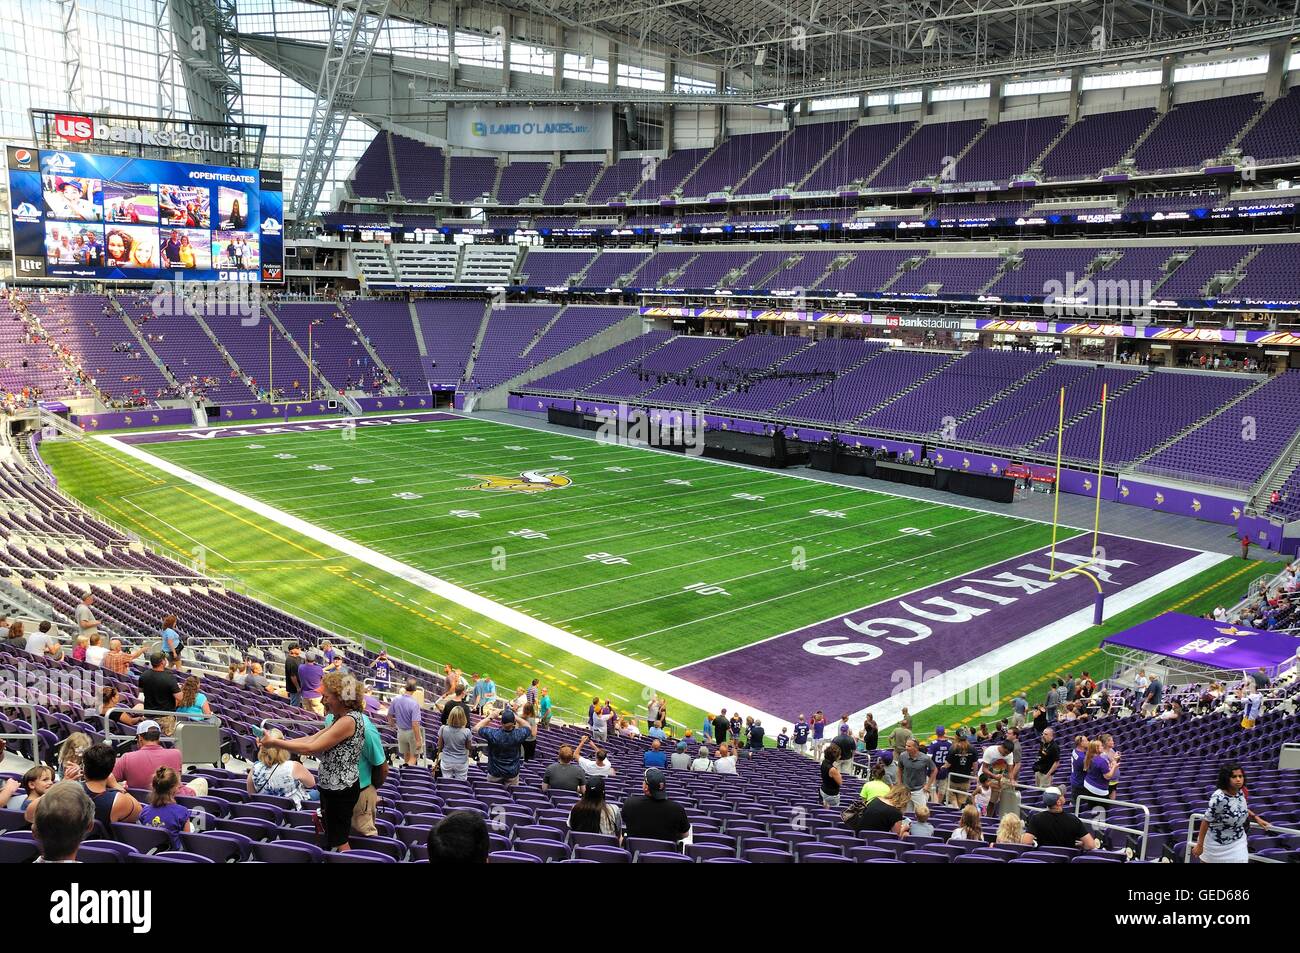 Interior of Minnesota Vikings US Bank Stadium in Minneapolis on a Sunny Day Stock Photo